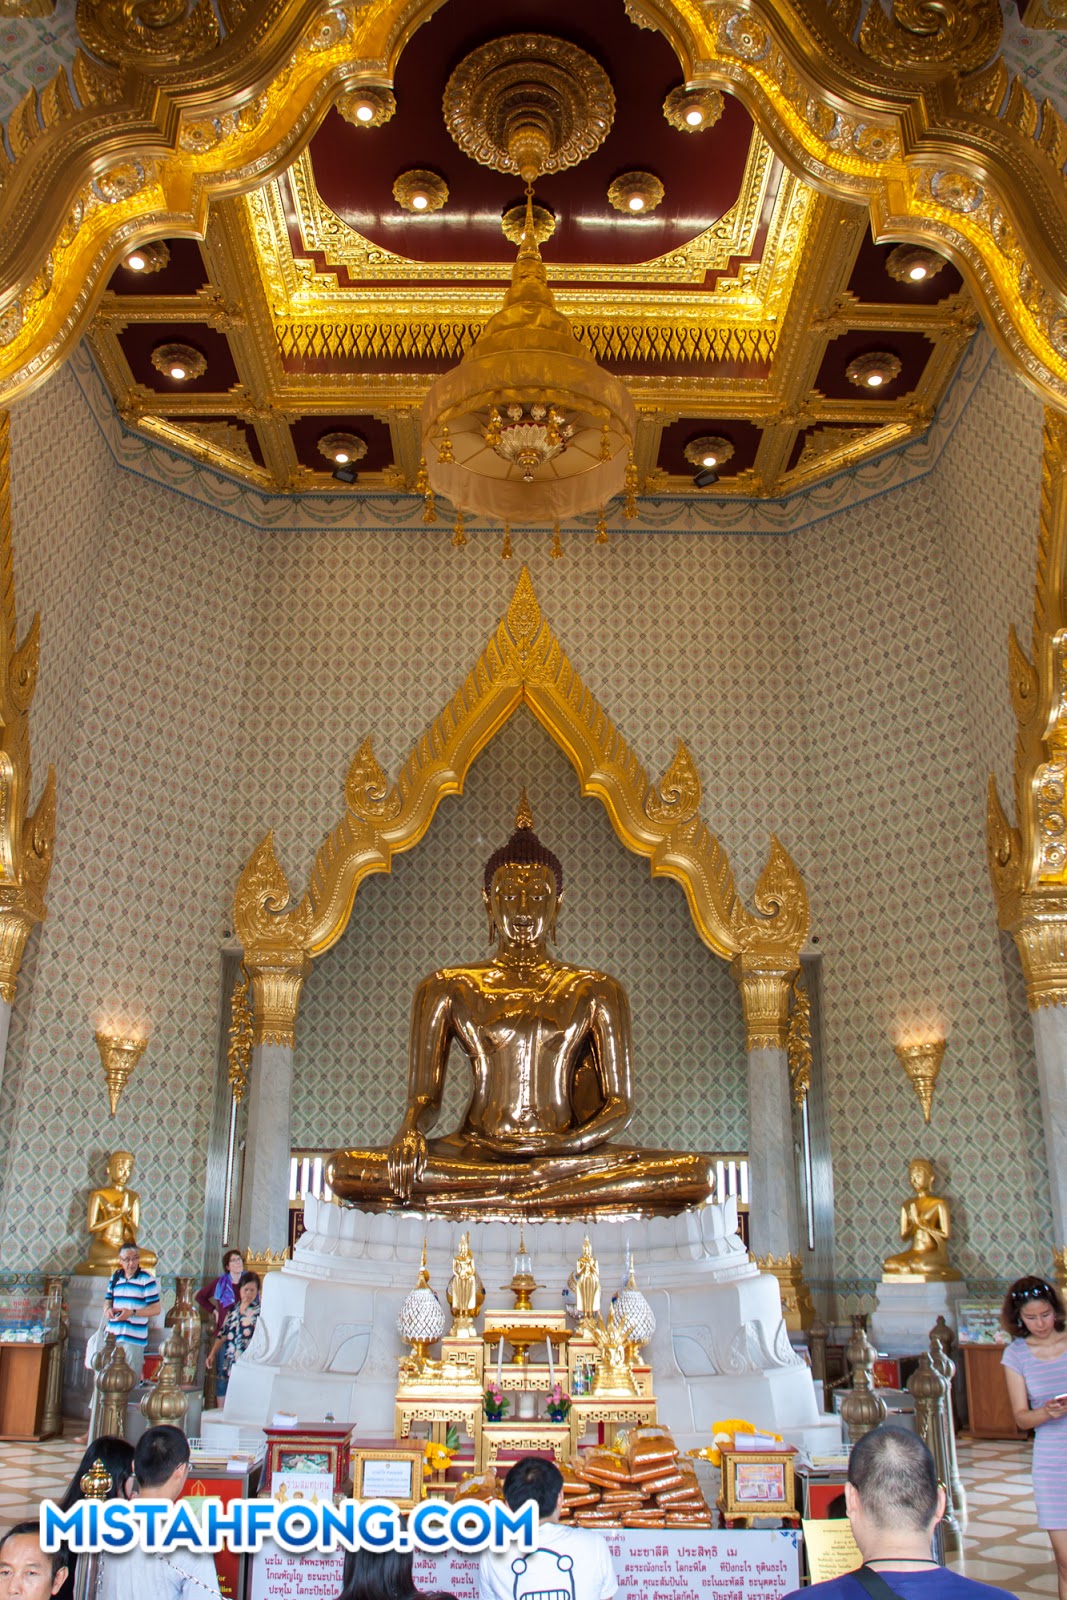 The Golden Buddha พระพุทธมหาสุวรรณปฏิมากร @ Wat Traimit